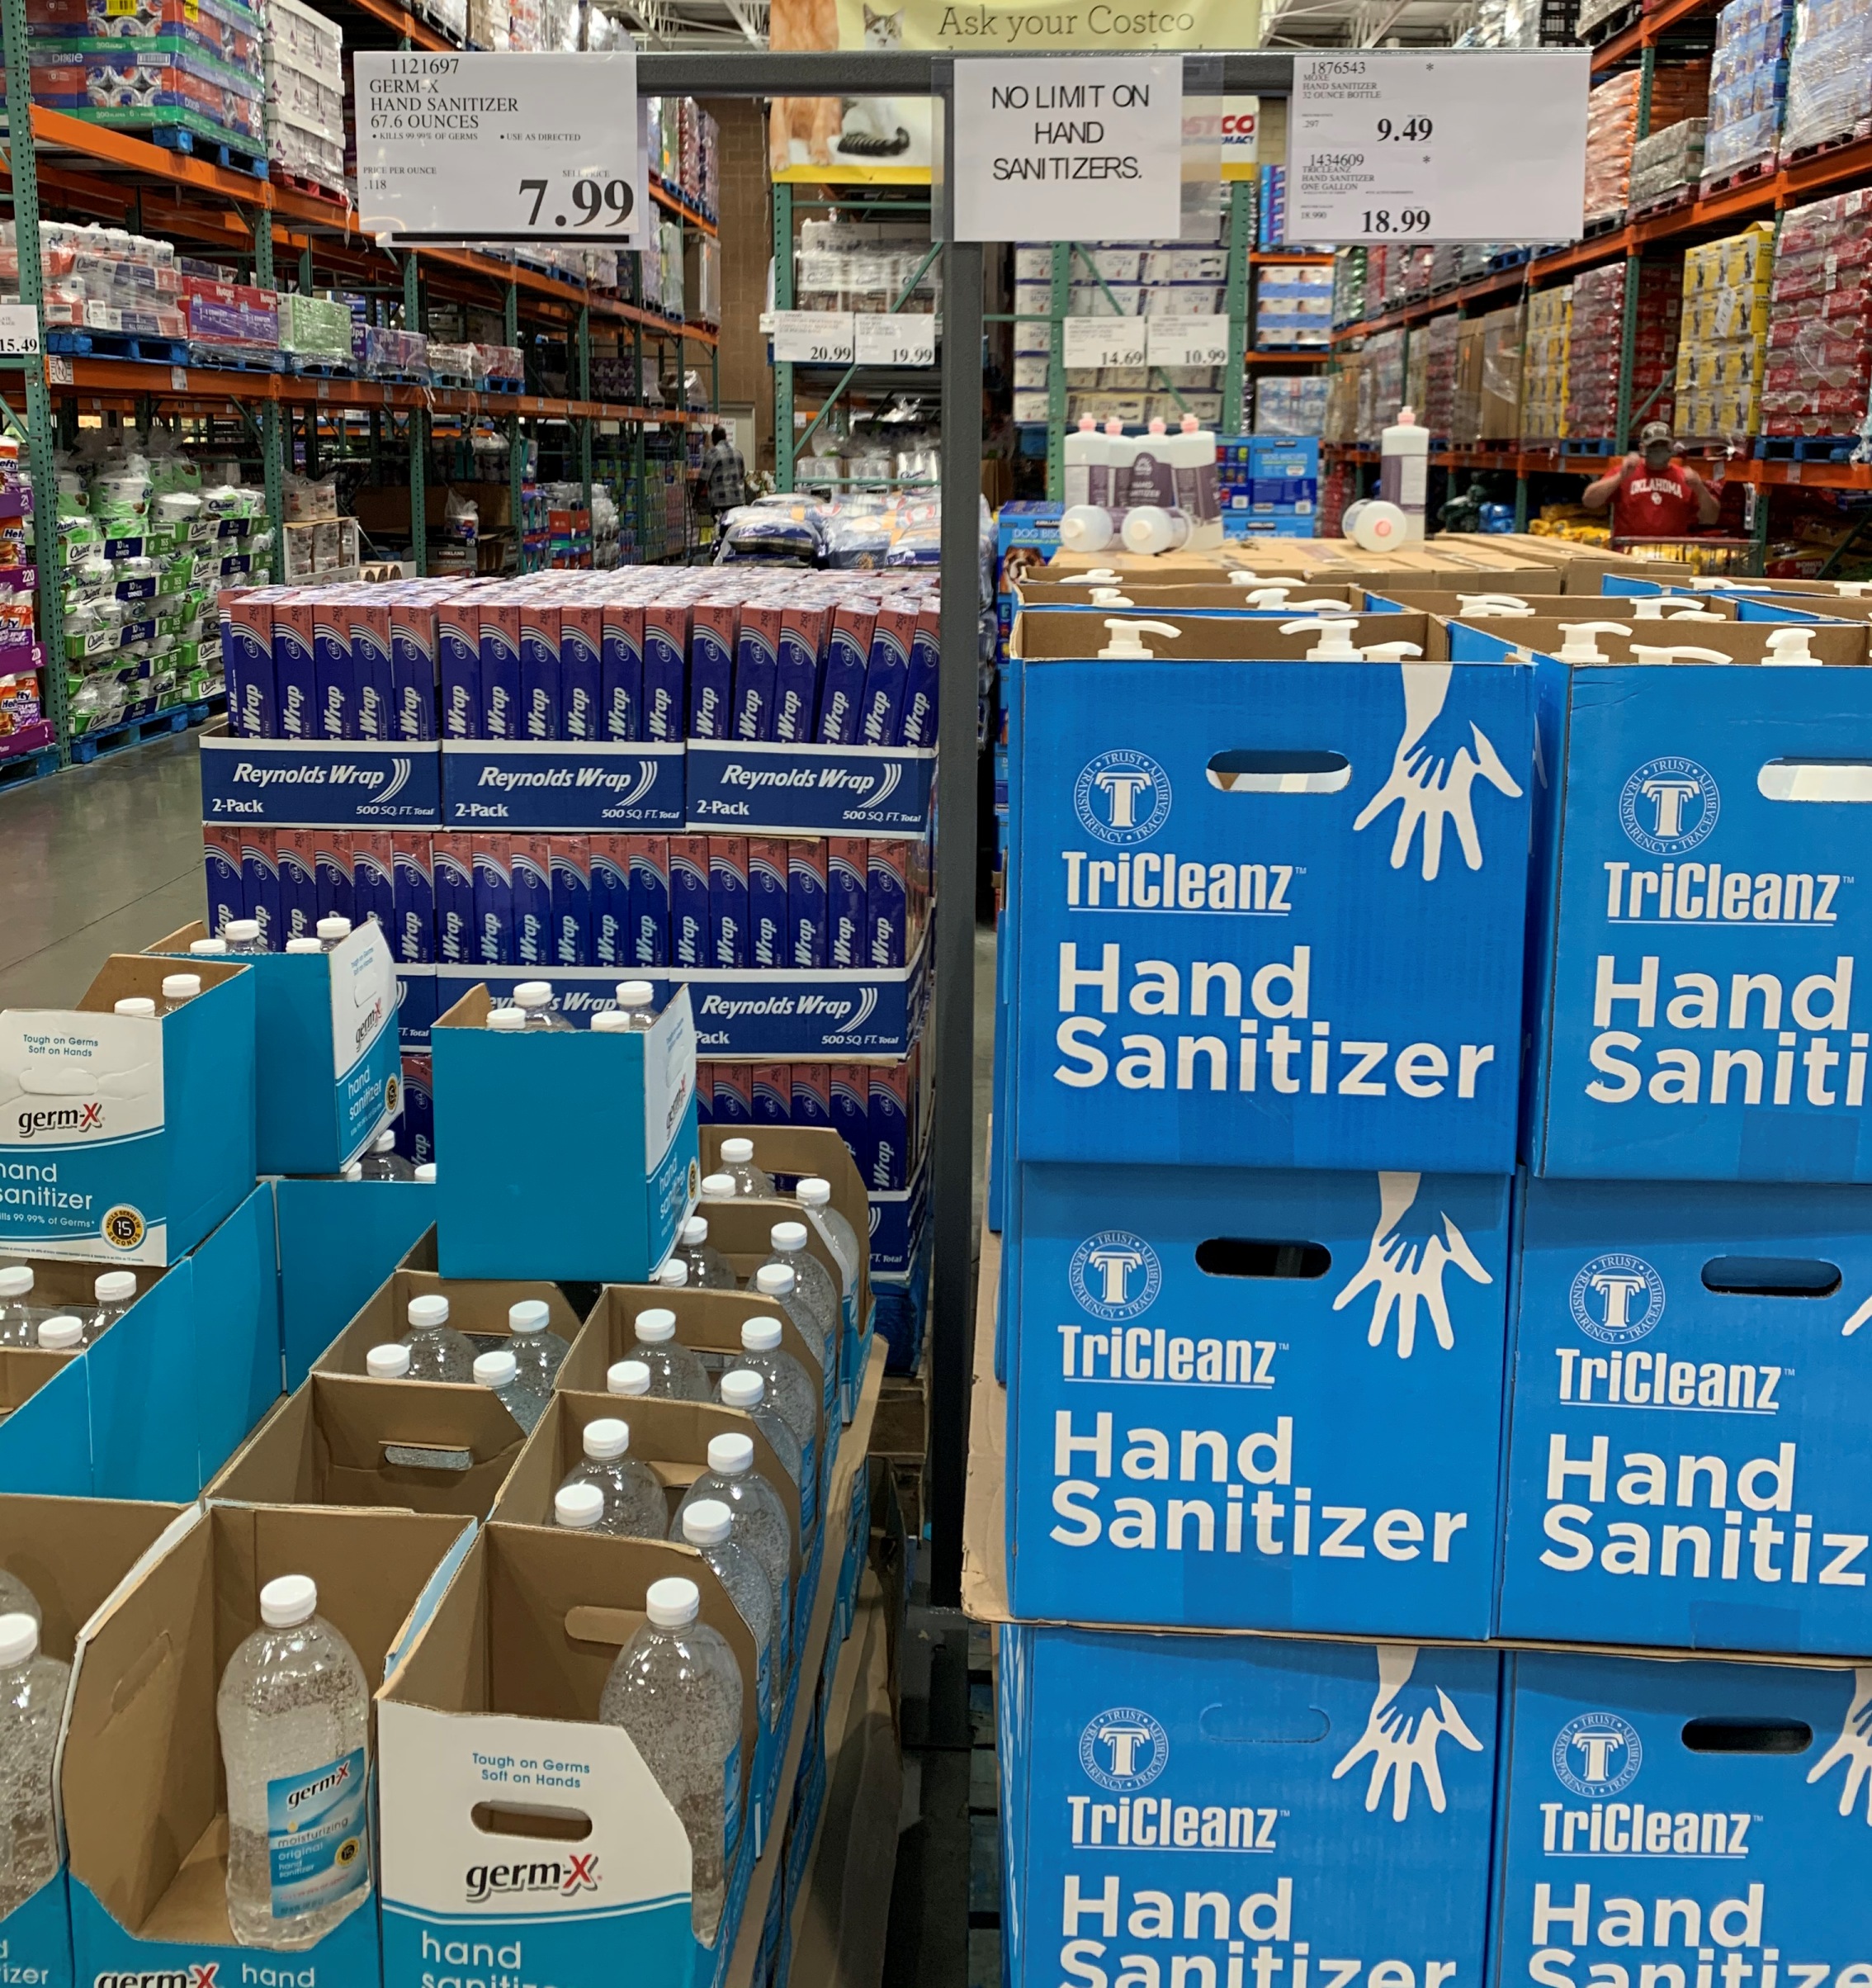 Costco Warehouse: Germ-X 67.6 fl.oz. Hand sanitizer (YMMV) $7.99